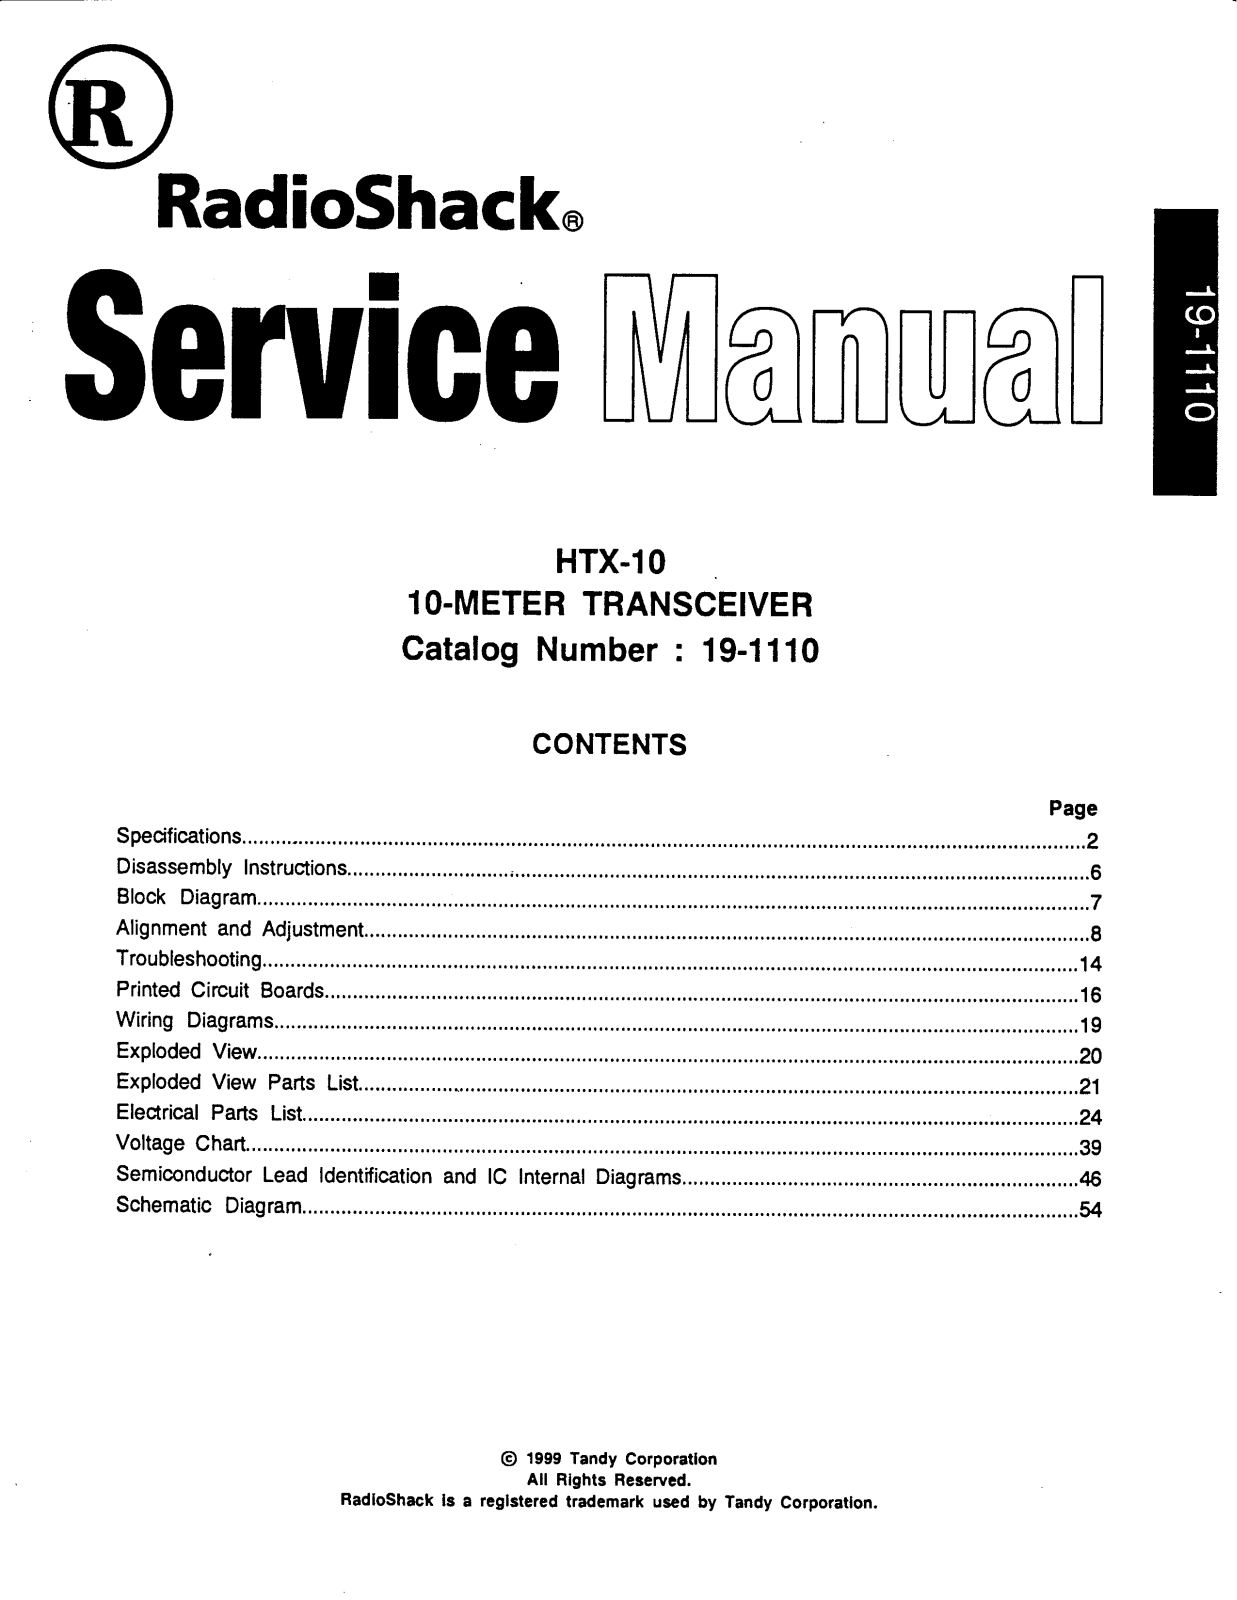 RadioShack HTX-10 Service Manual